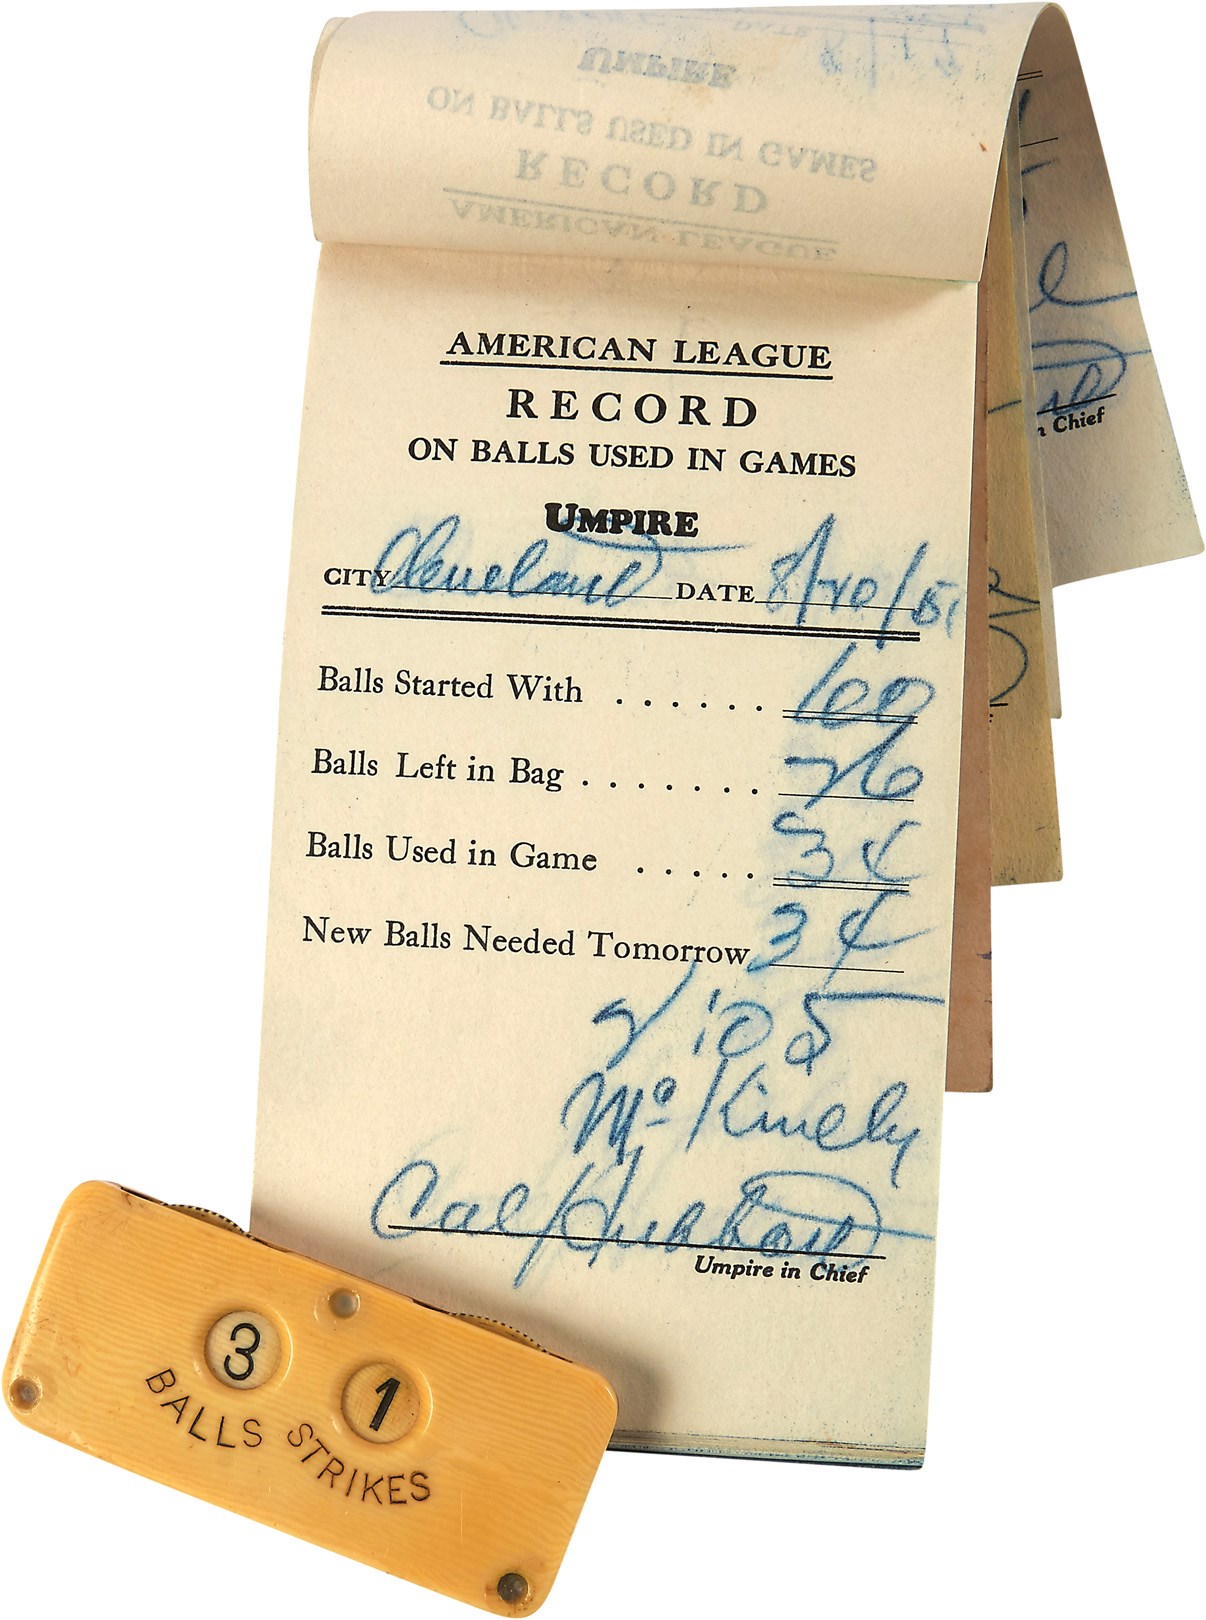 The Cal Hubbard Collection - Cal Hubbard's Umpire Indicator & Historic 1951 Record Book